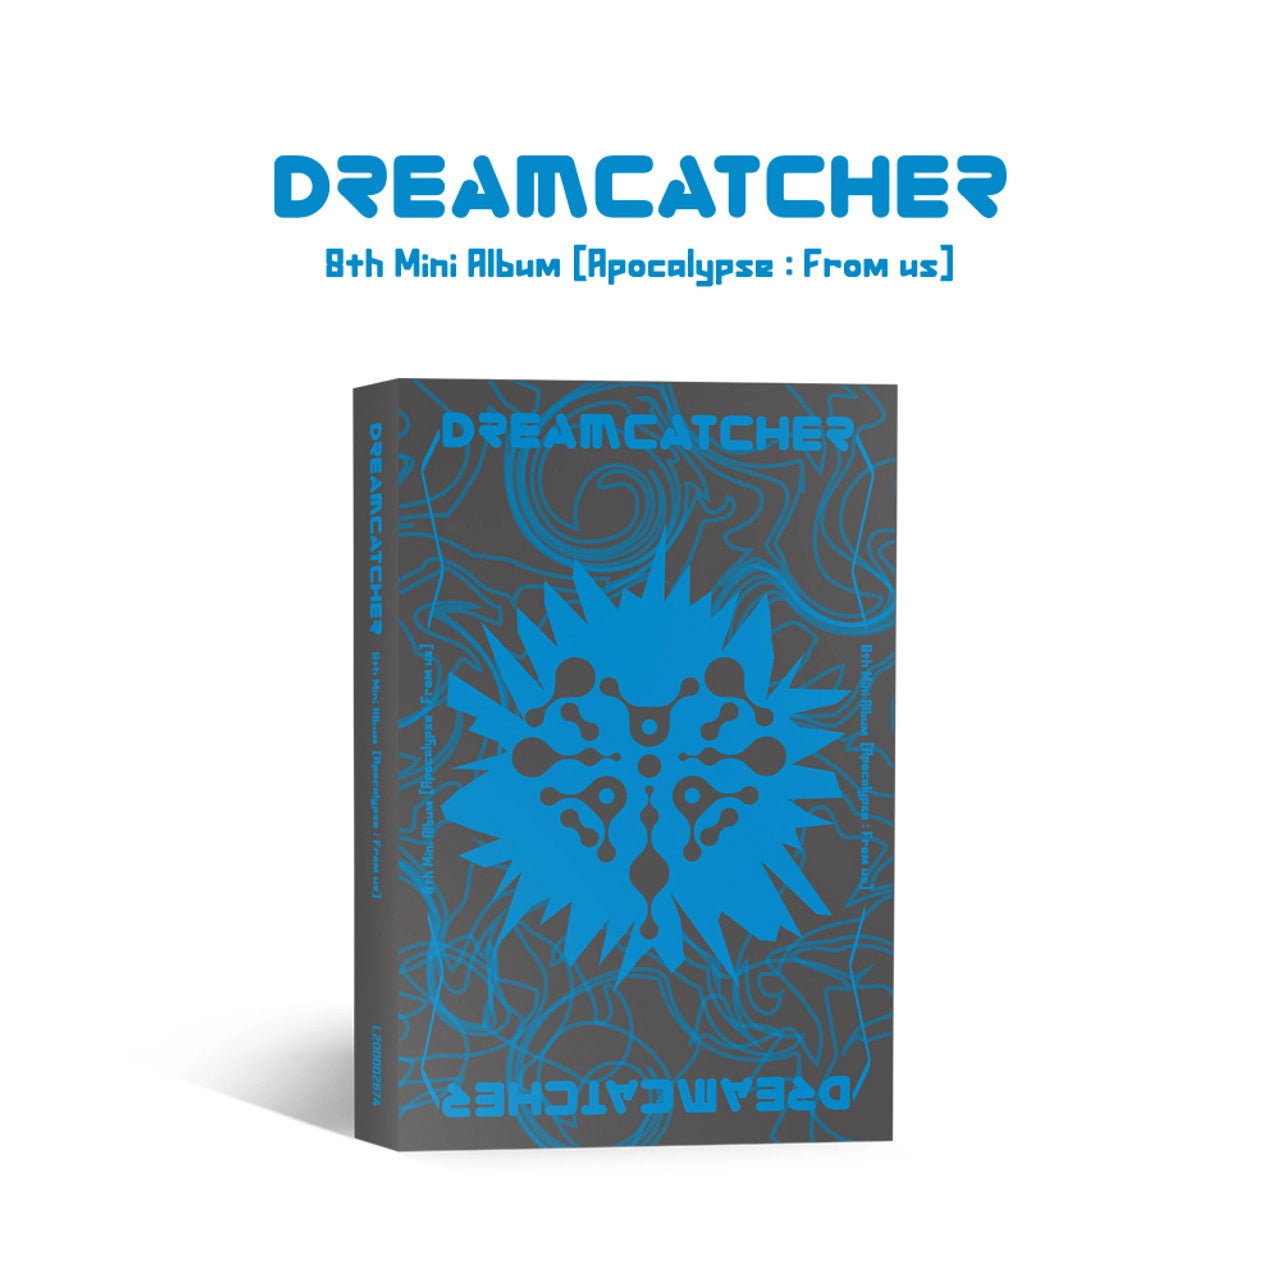 Dreamcatcher 8th Mini Album Apocalypse : From us - Platform Version